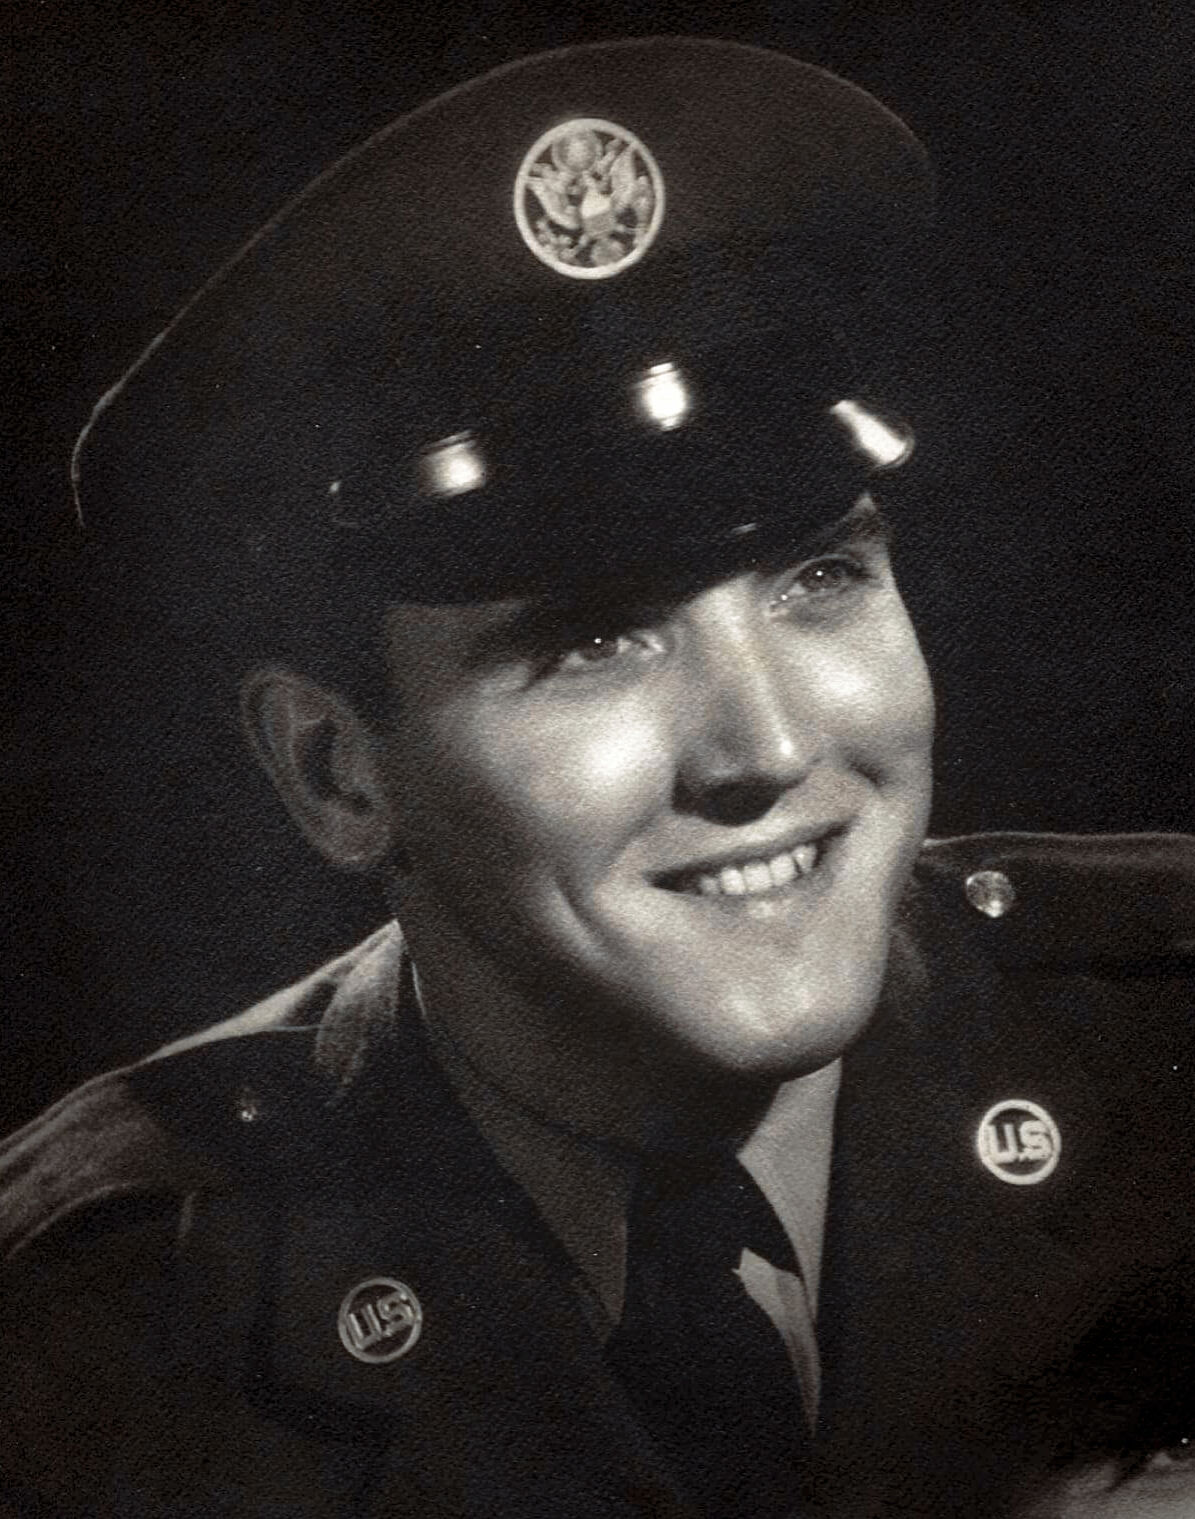 John Davis Smoot U.S. Airforce 1951 Stationed at Edwards Air Force Base